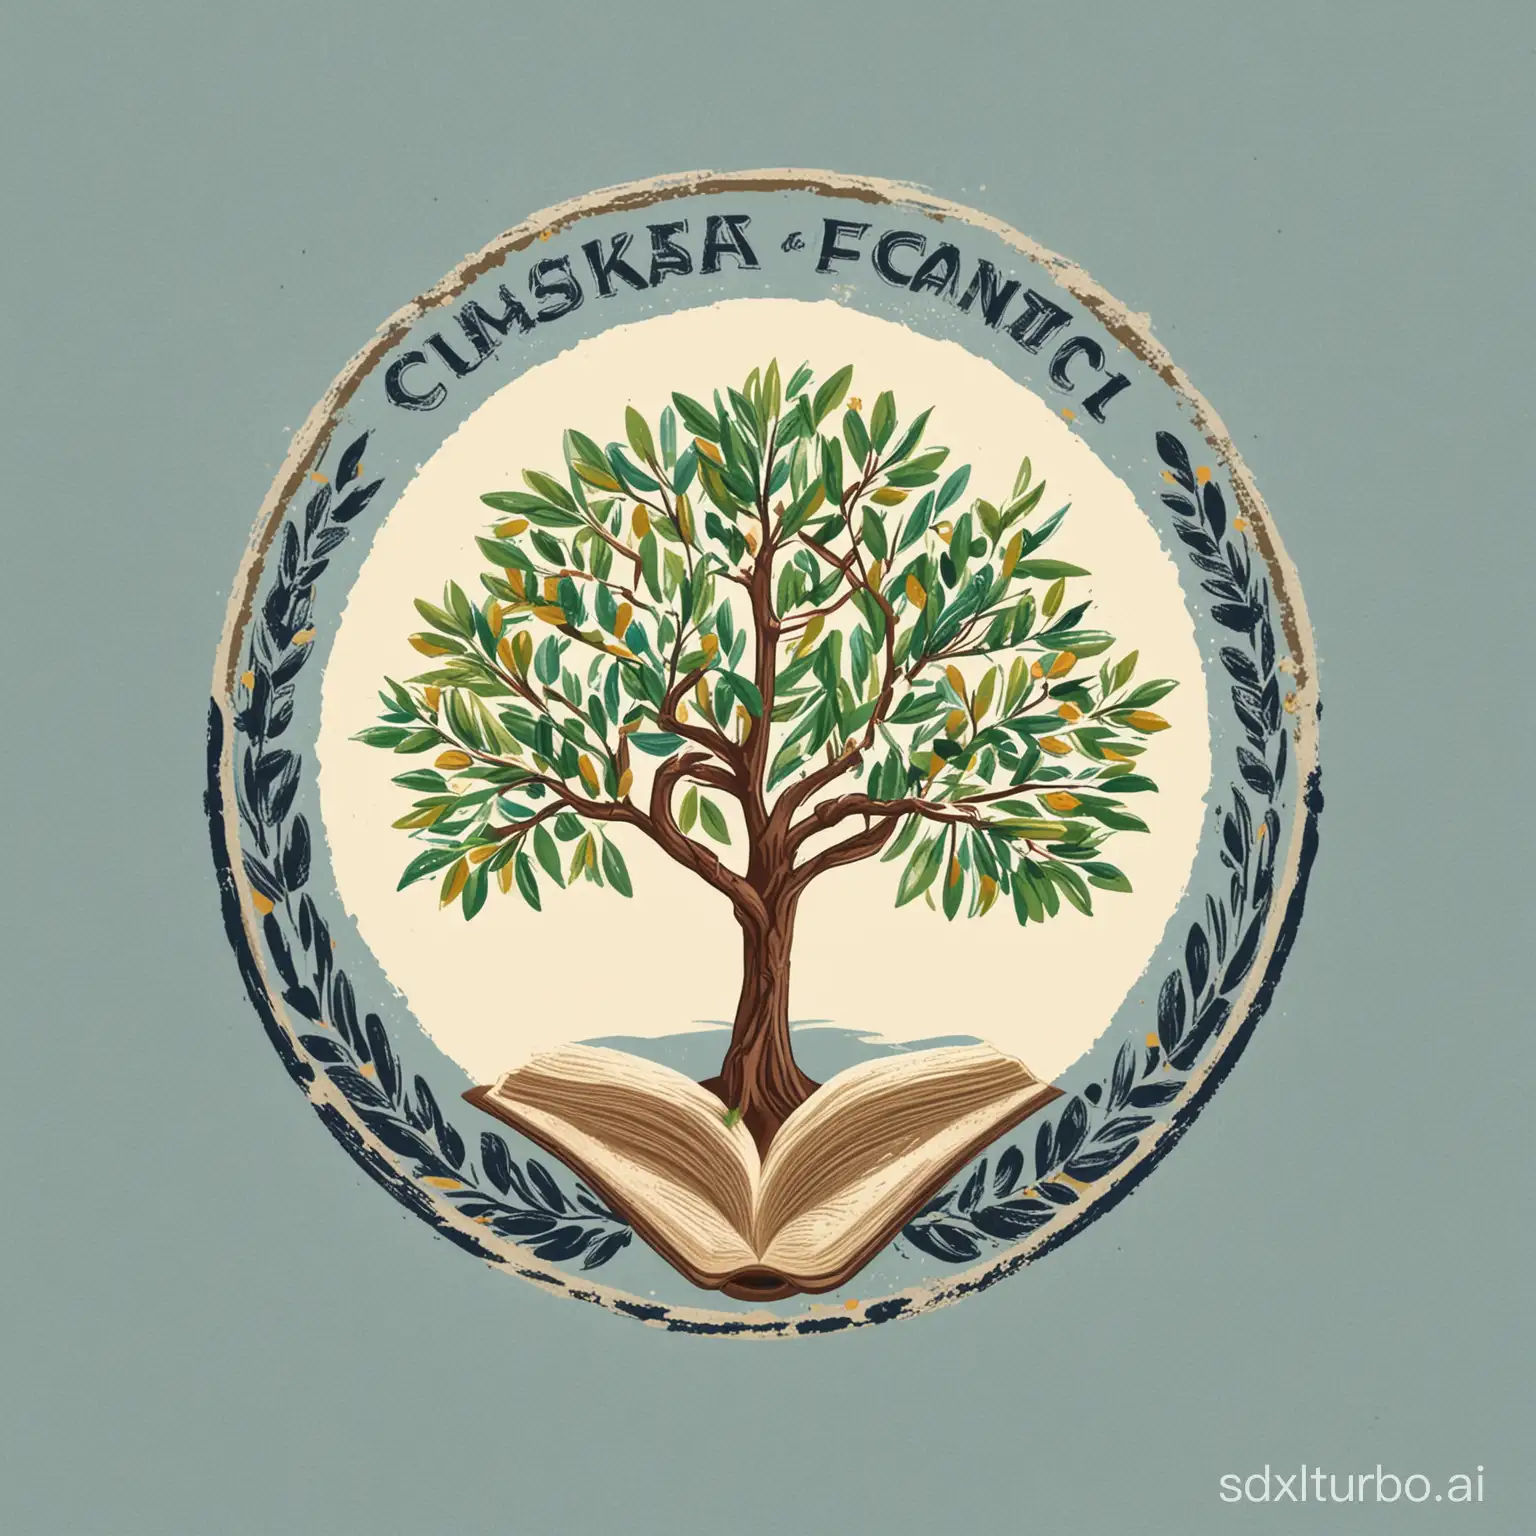 Greek-Primary-School-Logo-Almond-Tree-School-and-Open-Book-Emblem